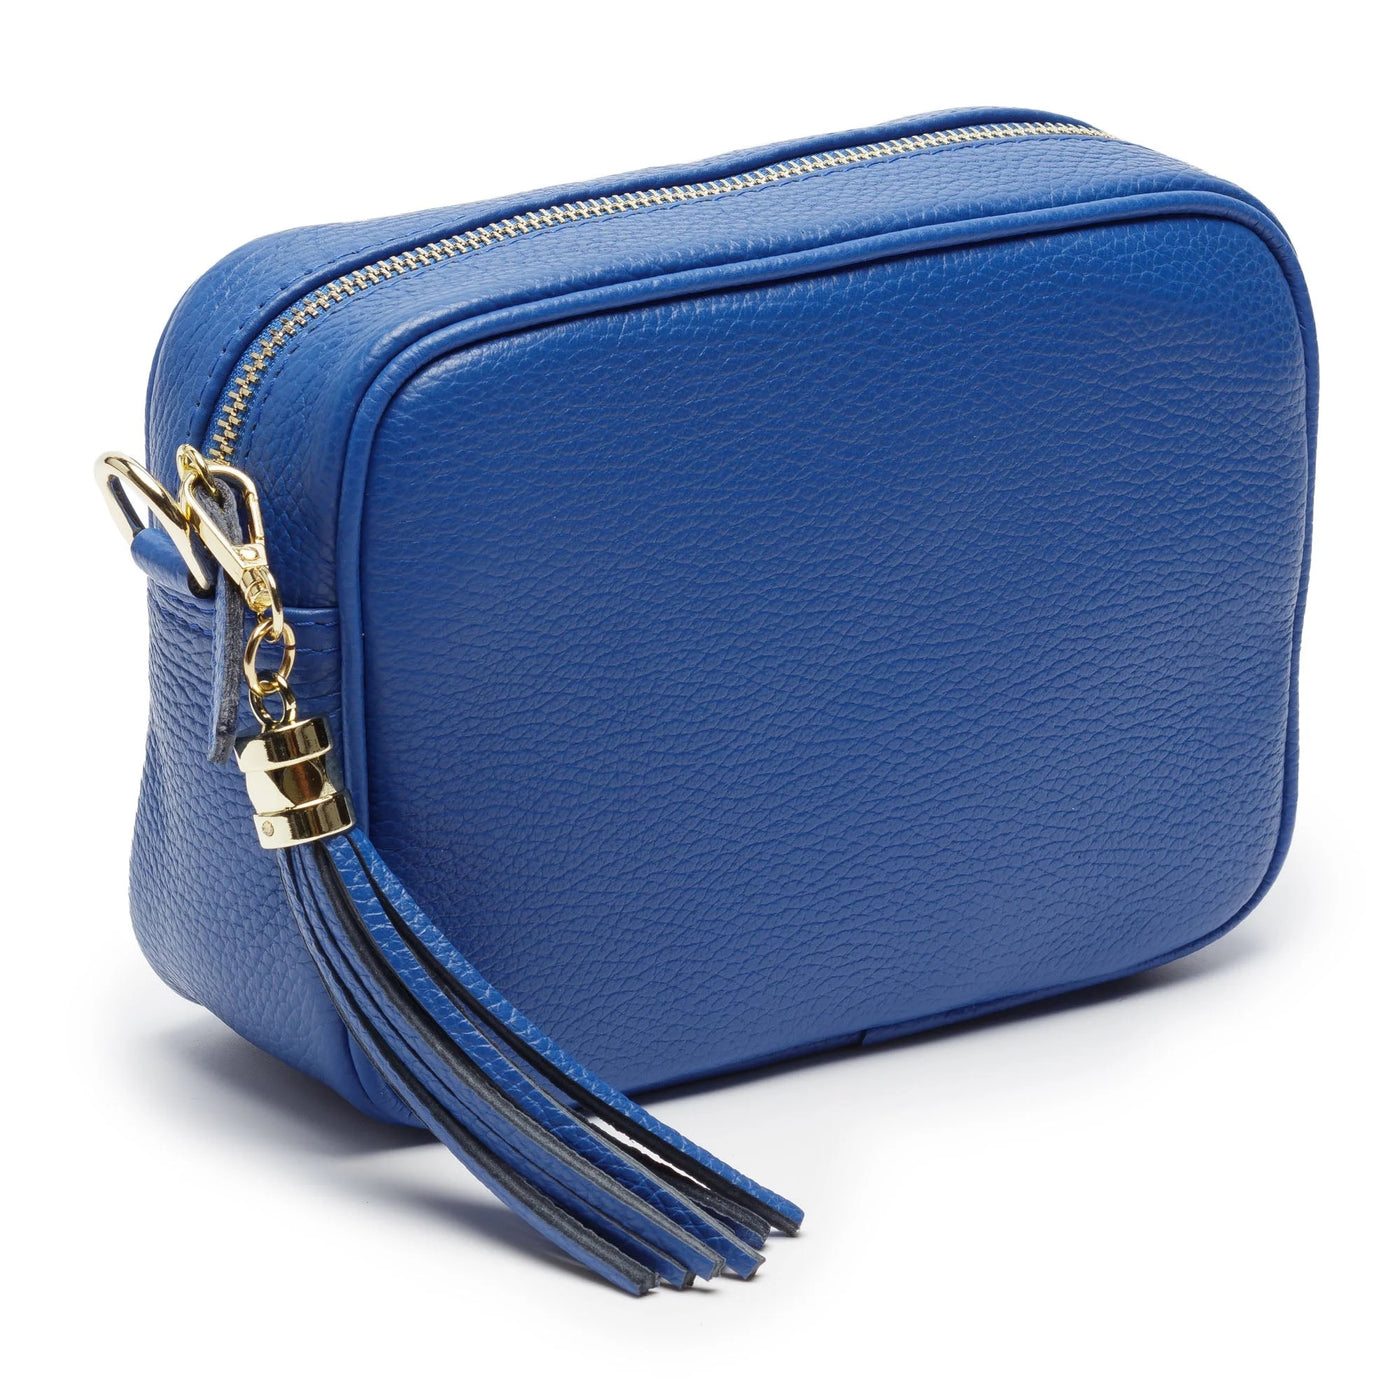 Elie Beaumont Designer Leather Crossbody Bag - Cobalt Blue (GOLD Fittings)